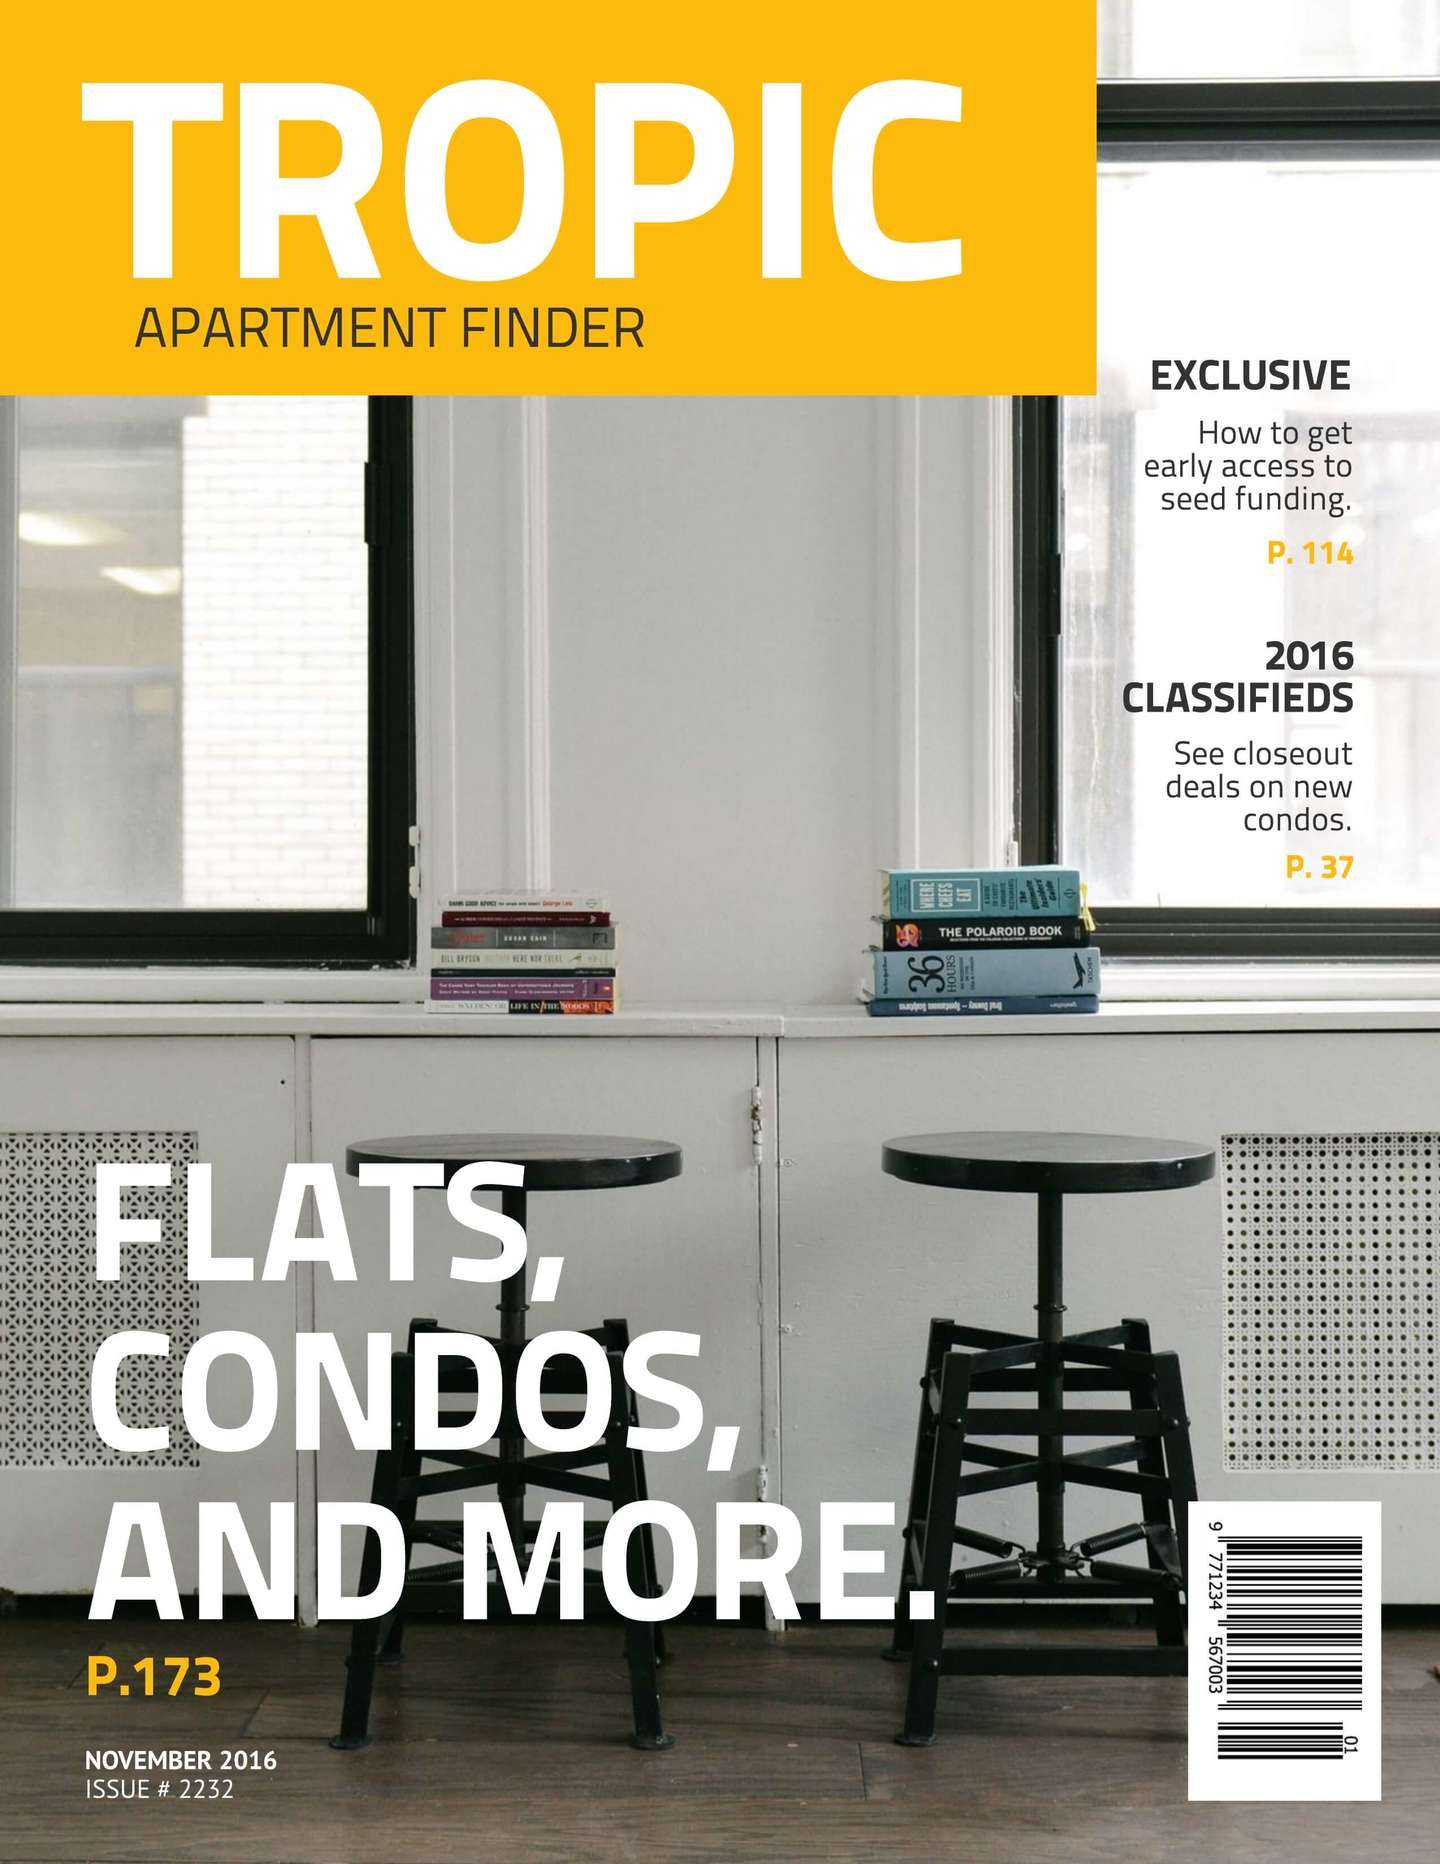 Free Magazine Templates + Magazine Cover Designs Inside Magazine Template For Microsoft Word